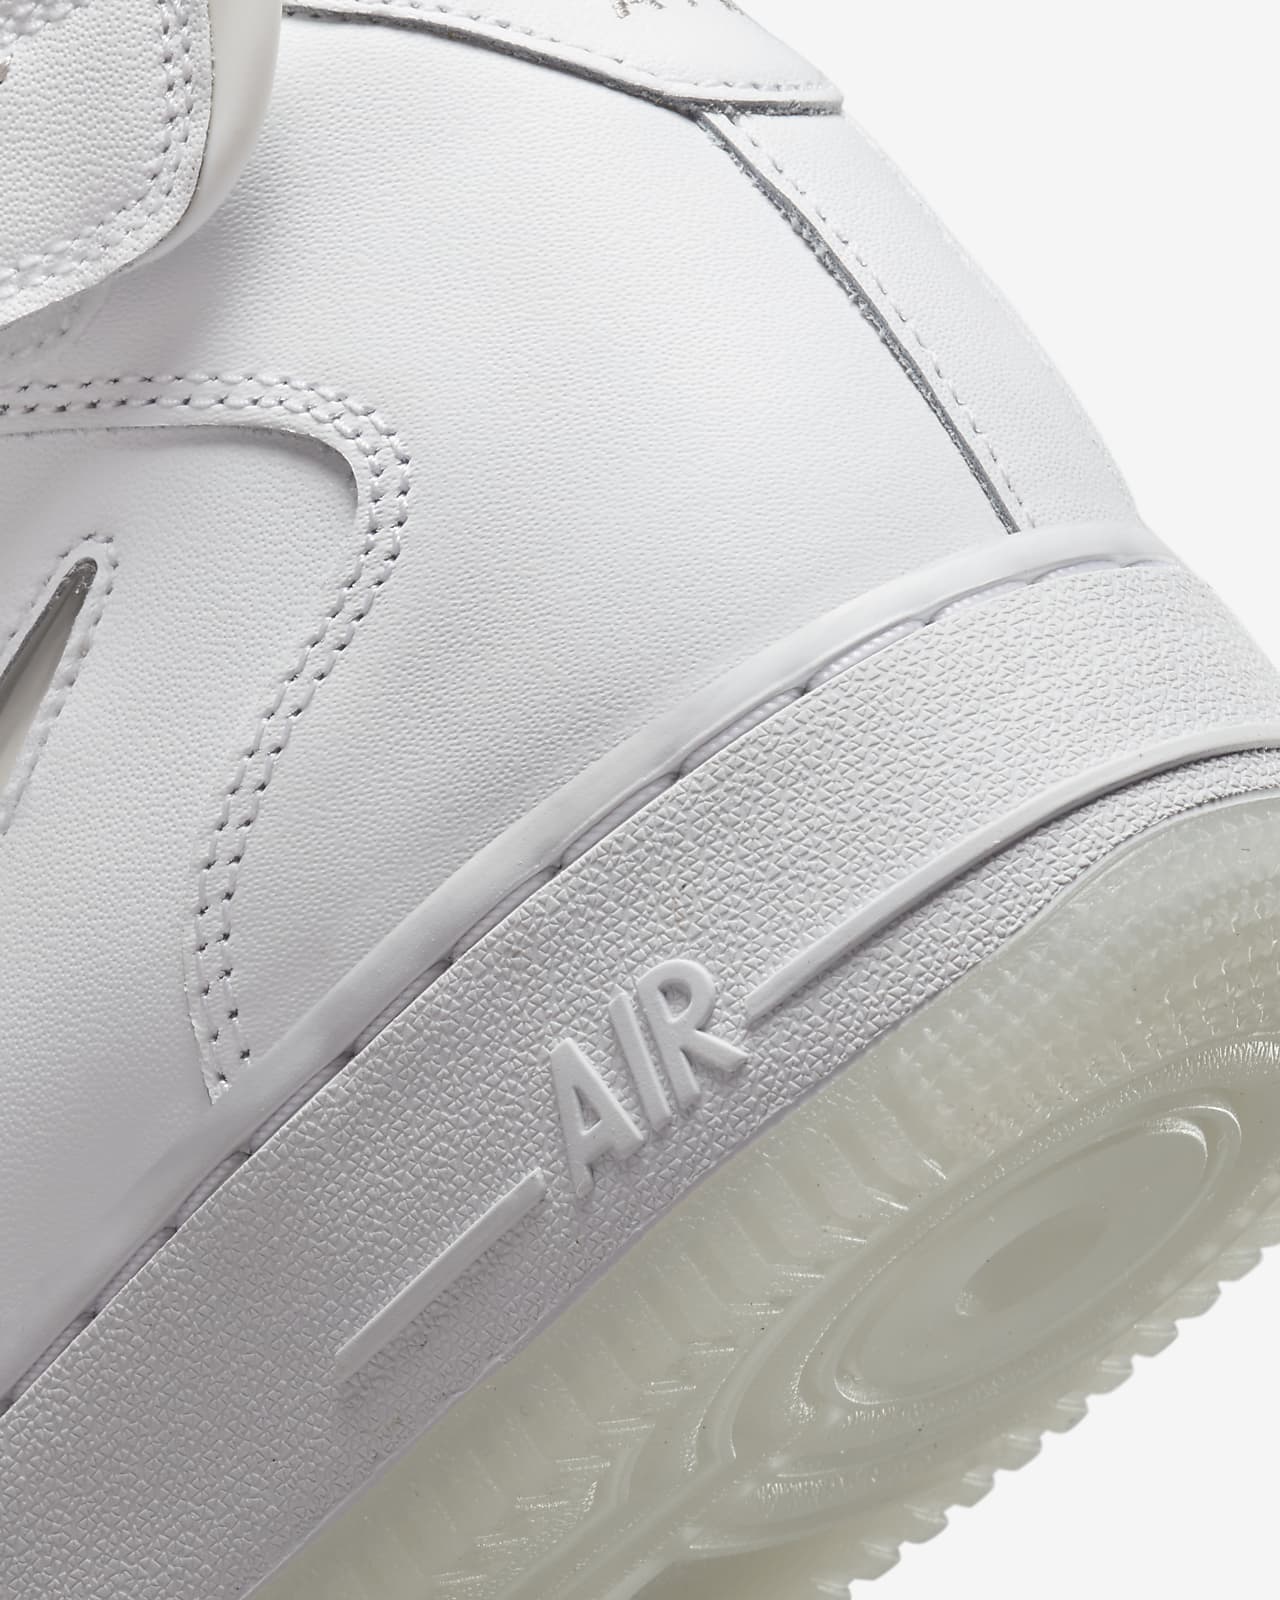 Nike Air Force 1 Mid 07 LV8 “White”